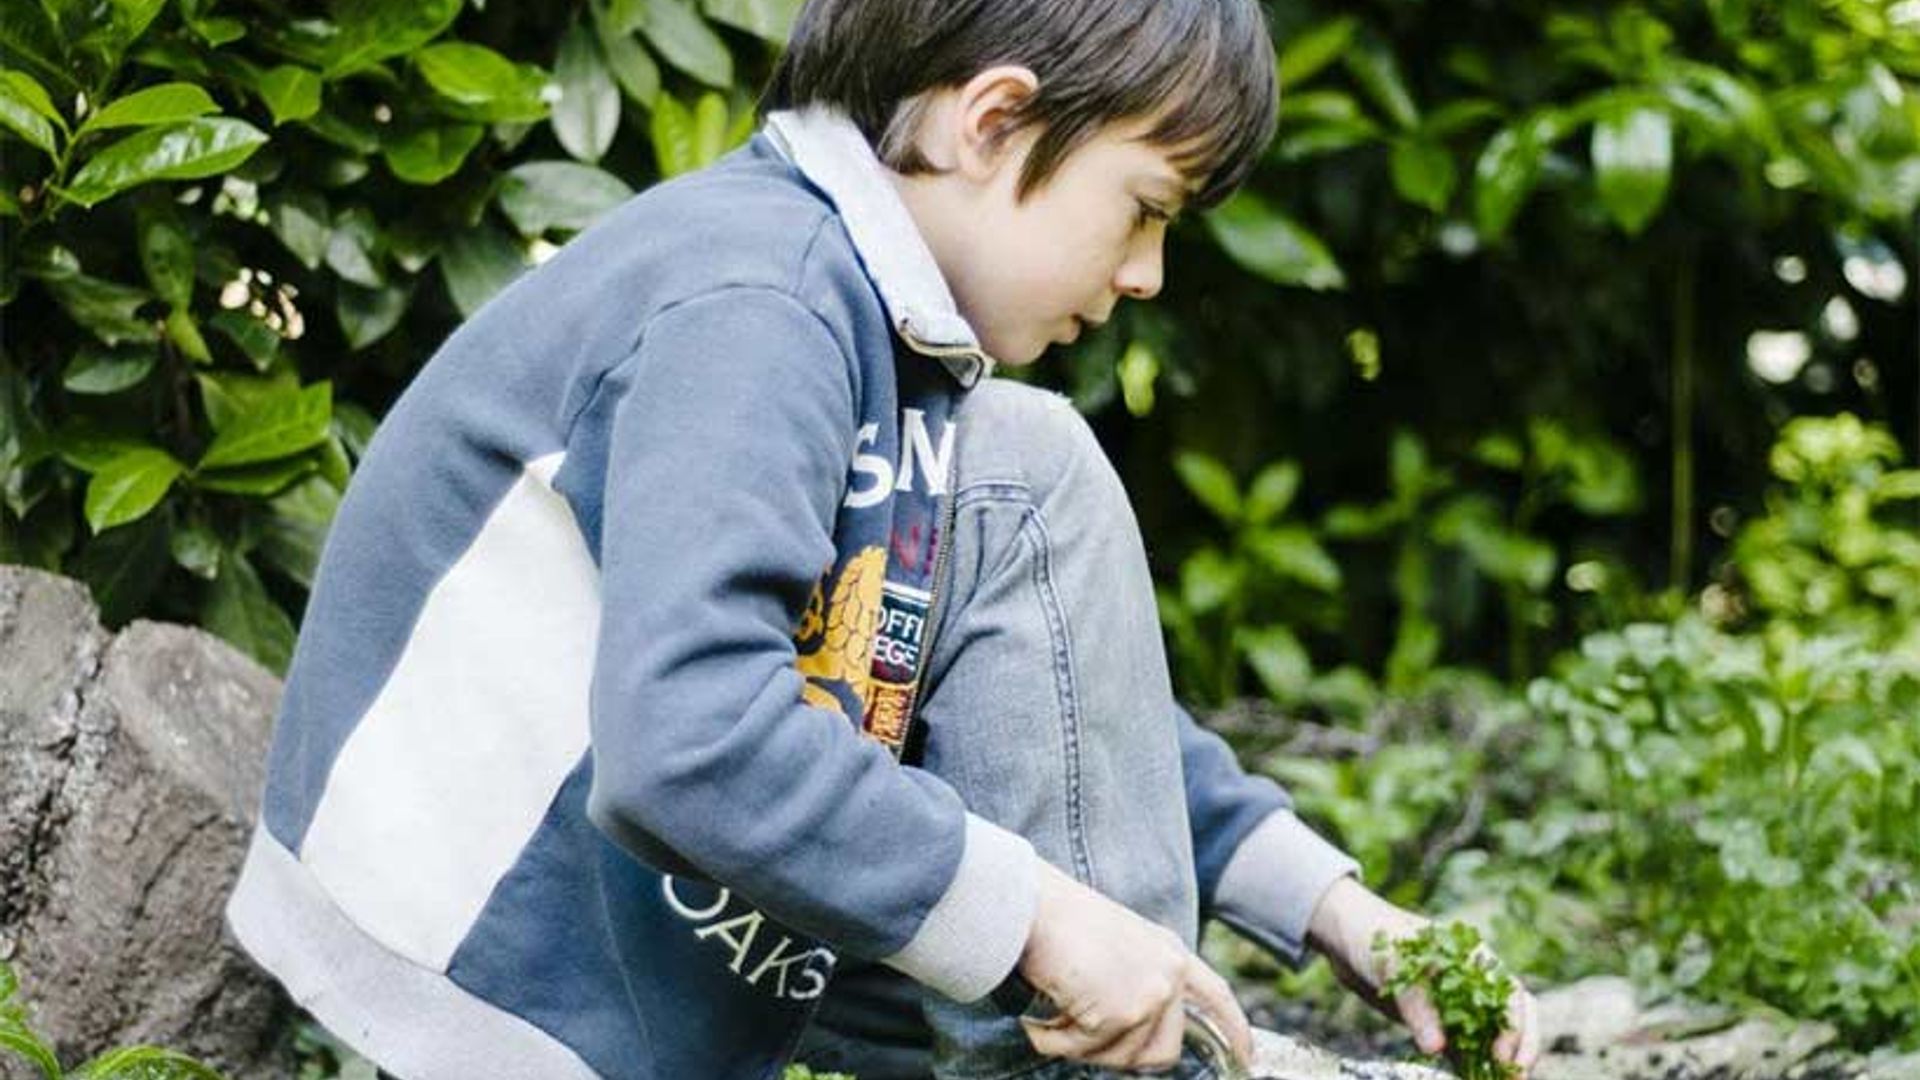 The health benefits of gardening for children